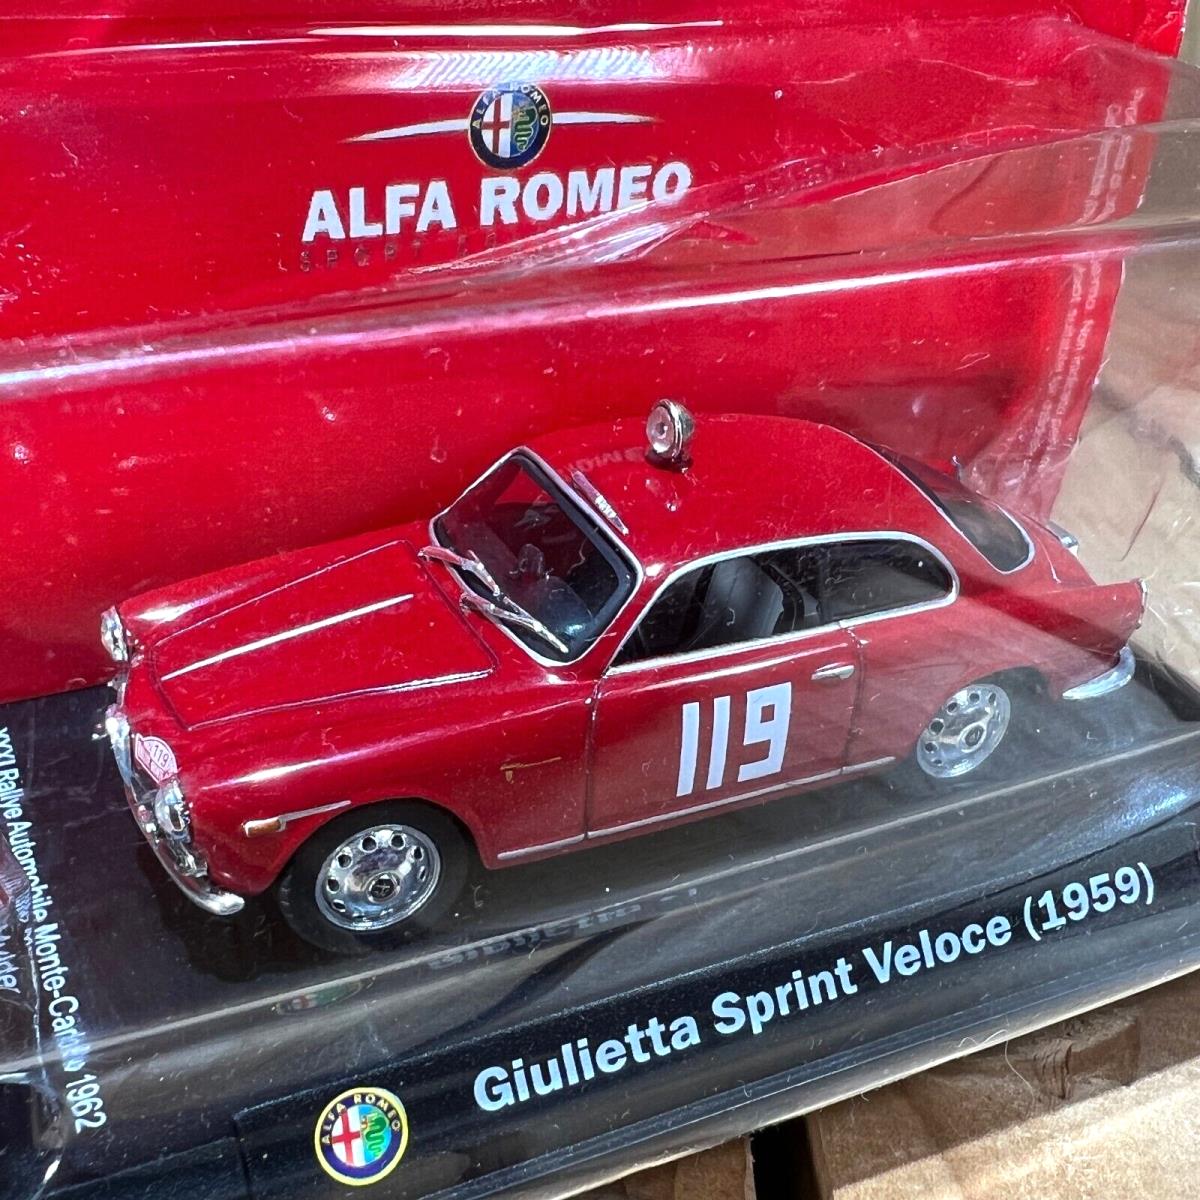 Hot Wheels 1959 Alfa Romeo Giuliette Sprint Veloce Officially Licensed 1:43 Diecast Car